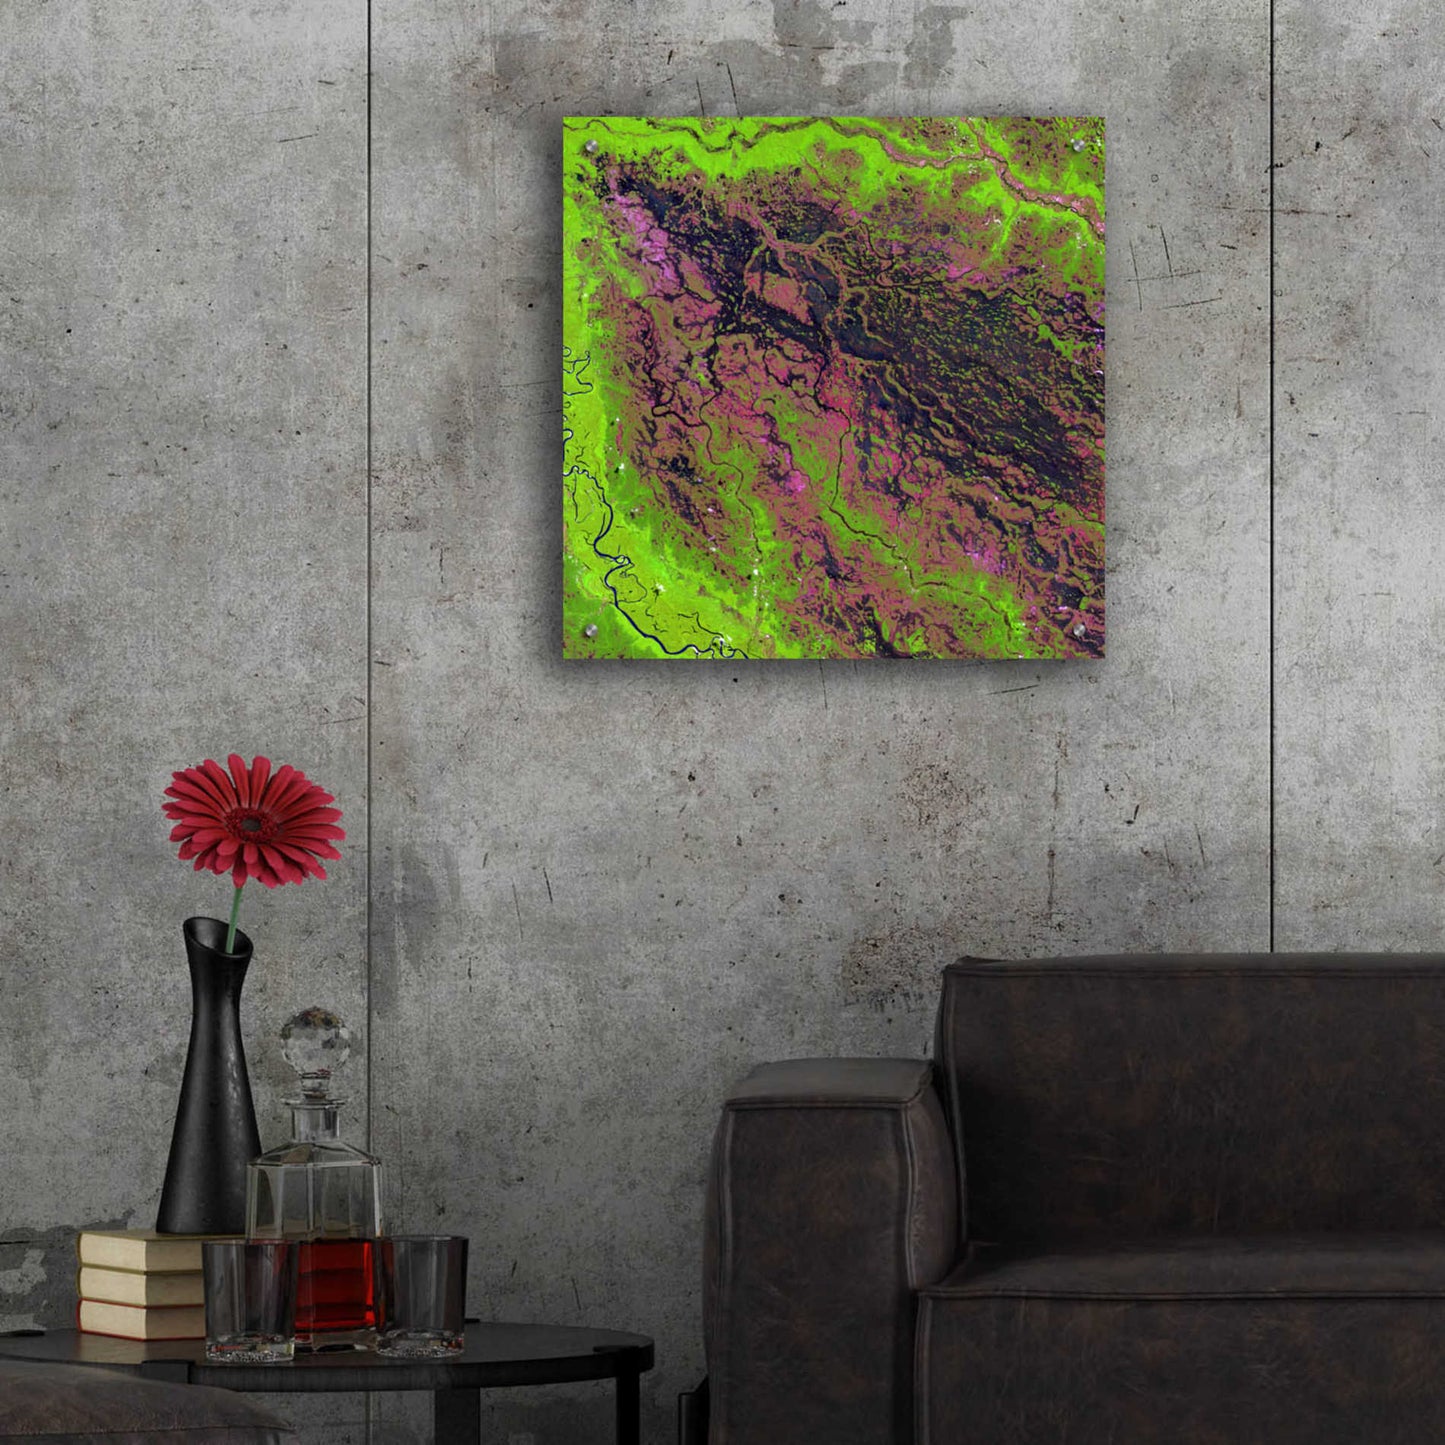 Epic Art 'Earth as Art: Demini River' Acrylic Glass Wall Art,24x24